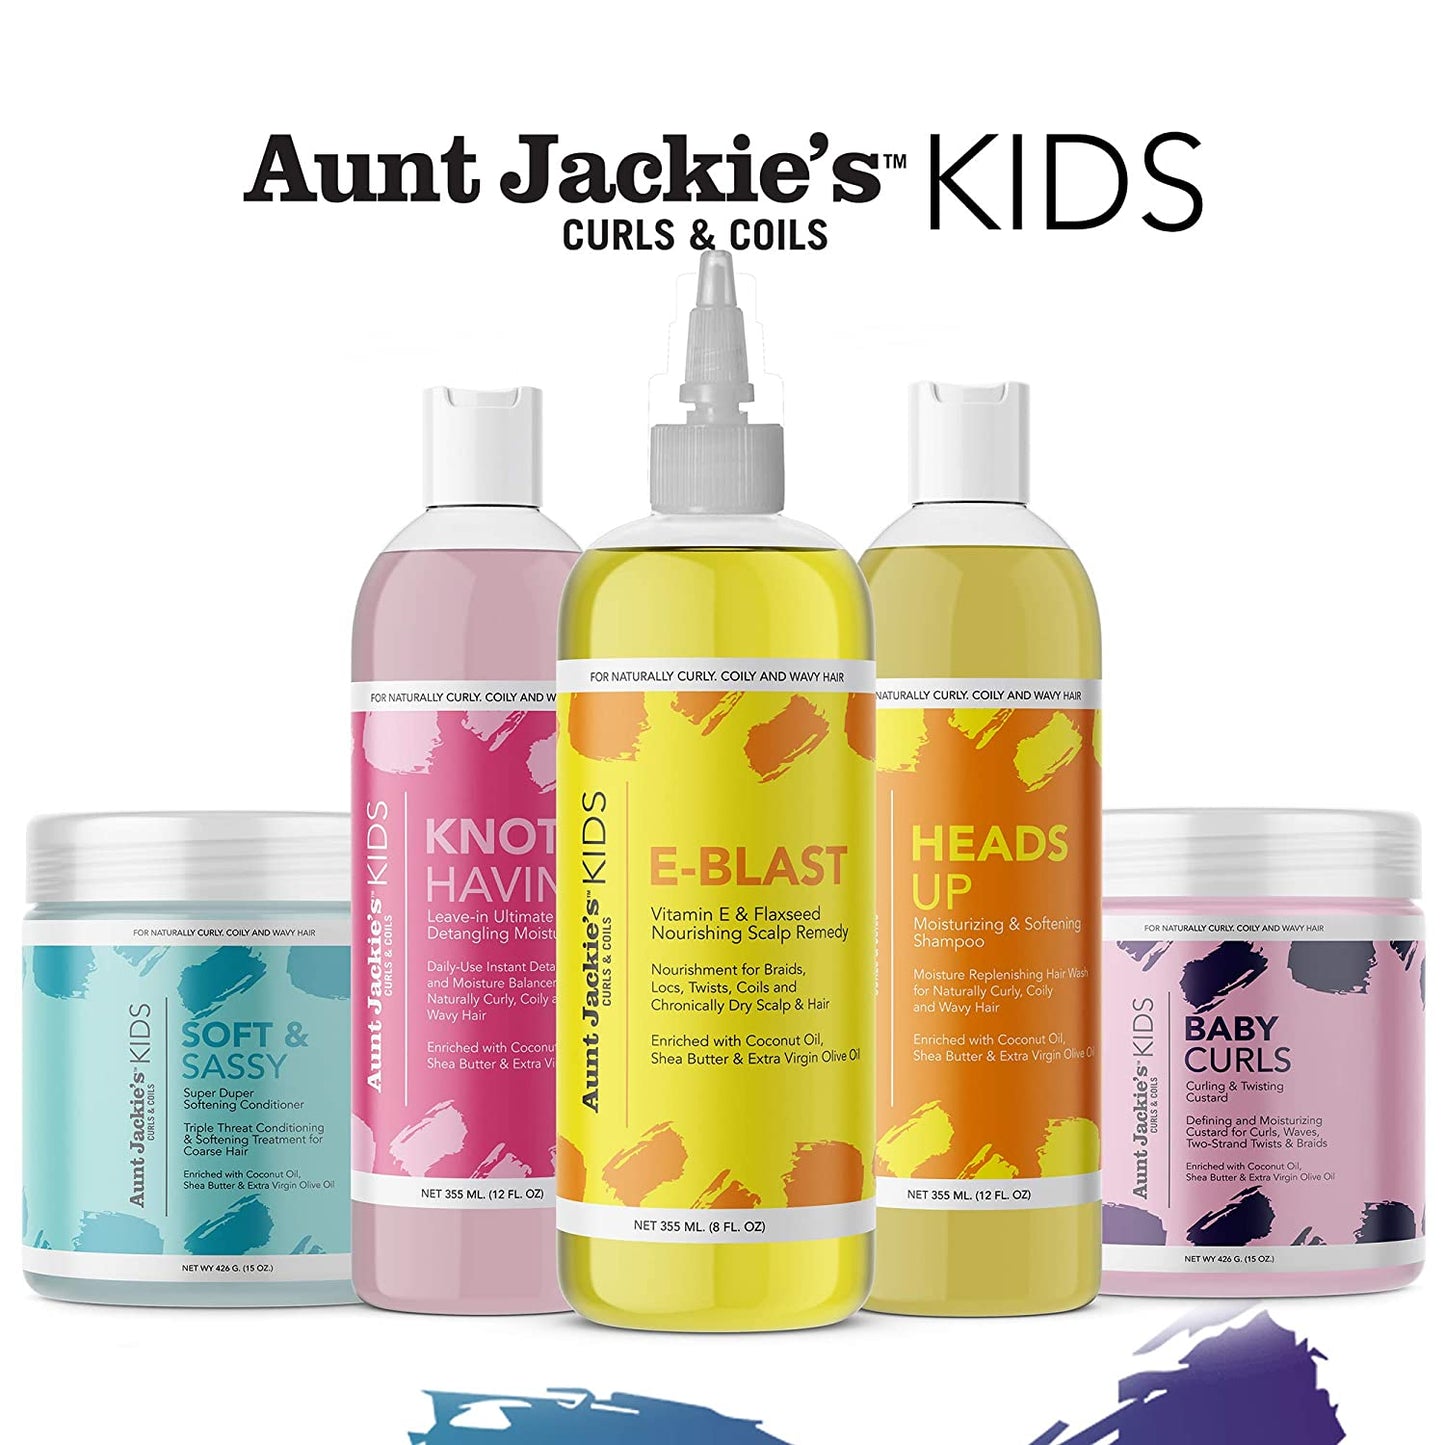 Aunt Jackie’s Soft & Sassy – Super Duper Softening Conditioner, 426 g